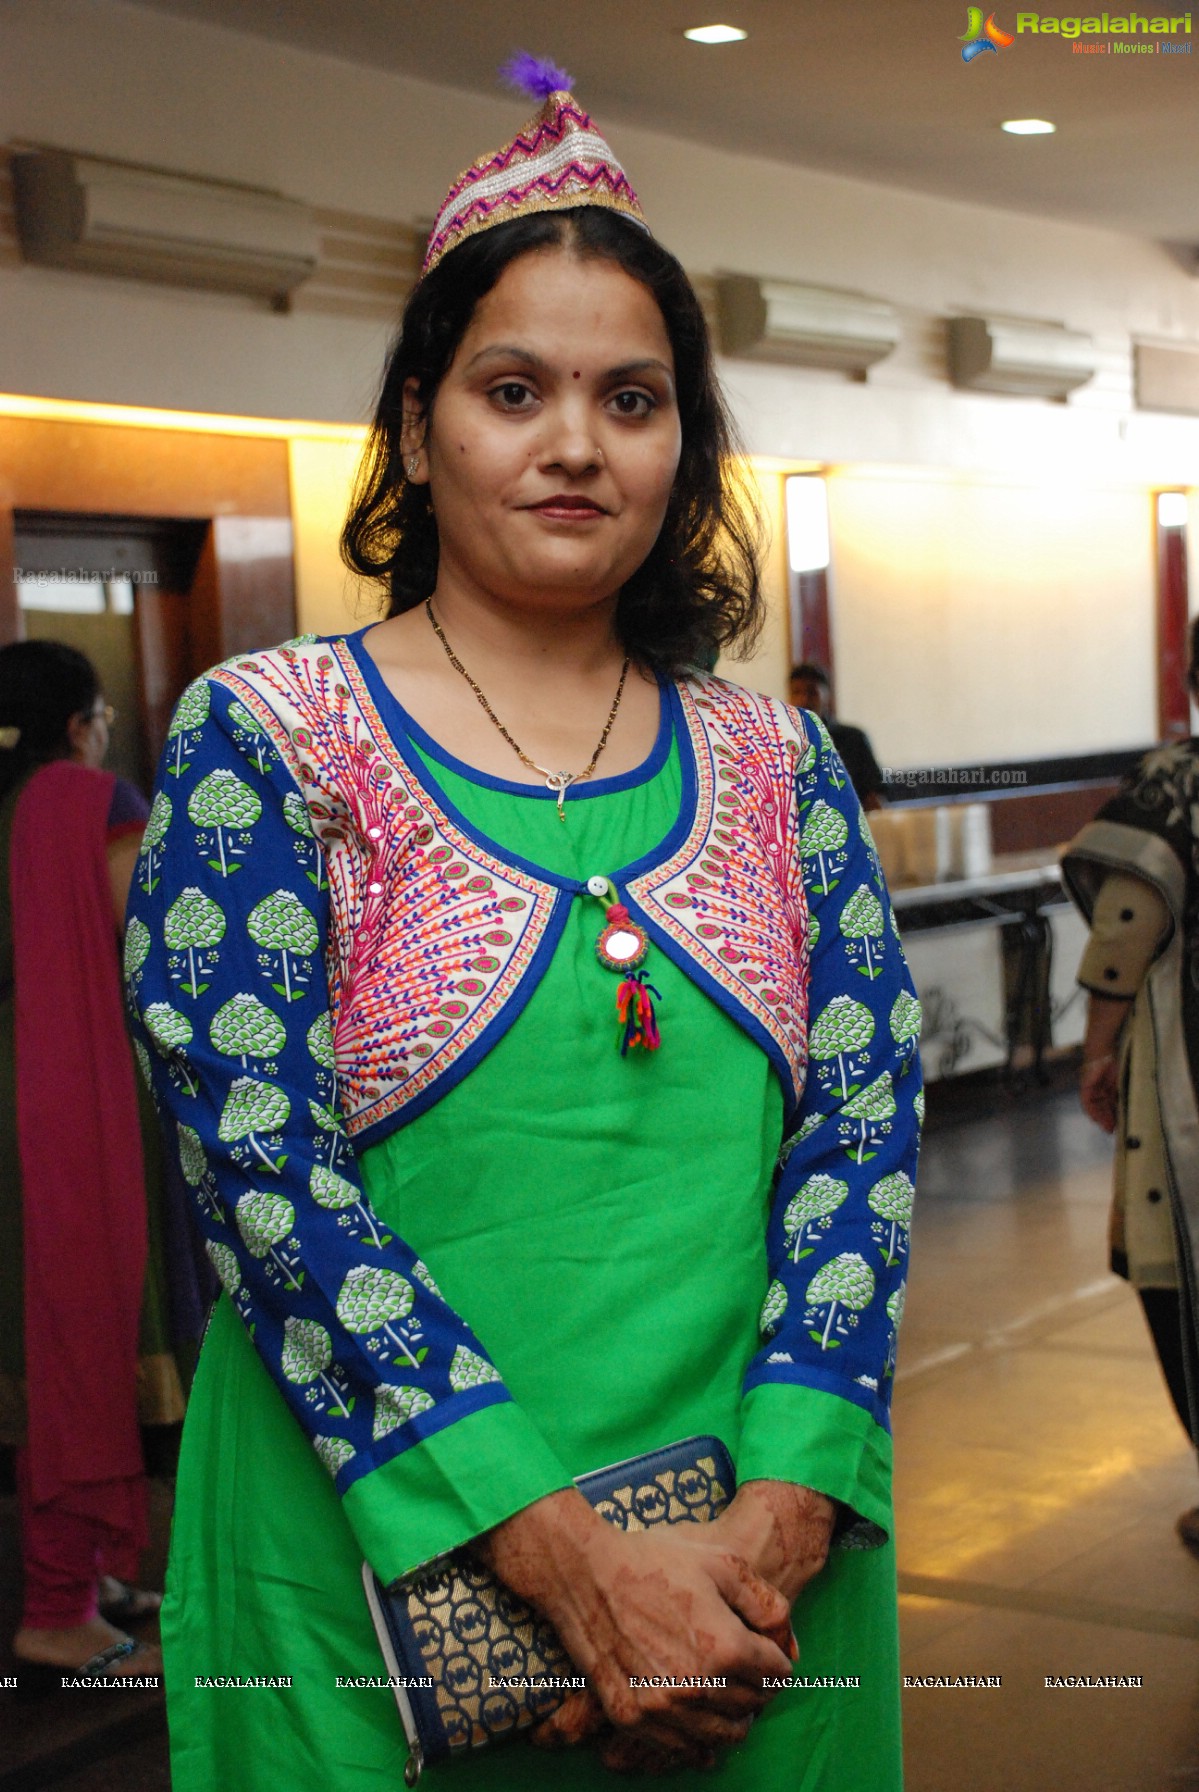 Sham-E-Ghazal - Get Together Diwali Celebrations 2015 by The Belle Femme Organization at Chilly's, Hyderabad